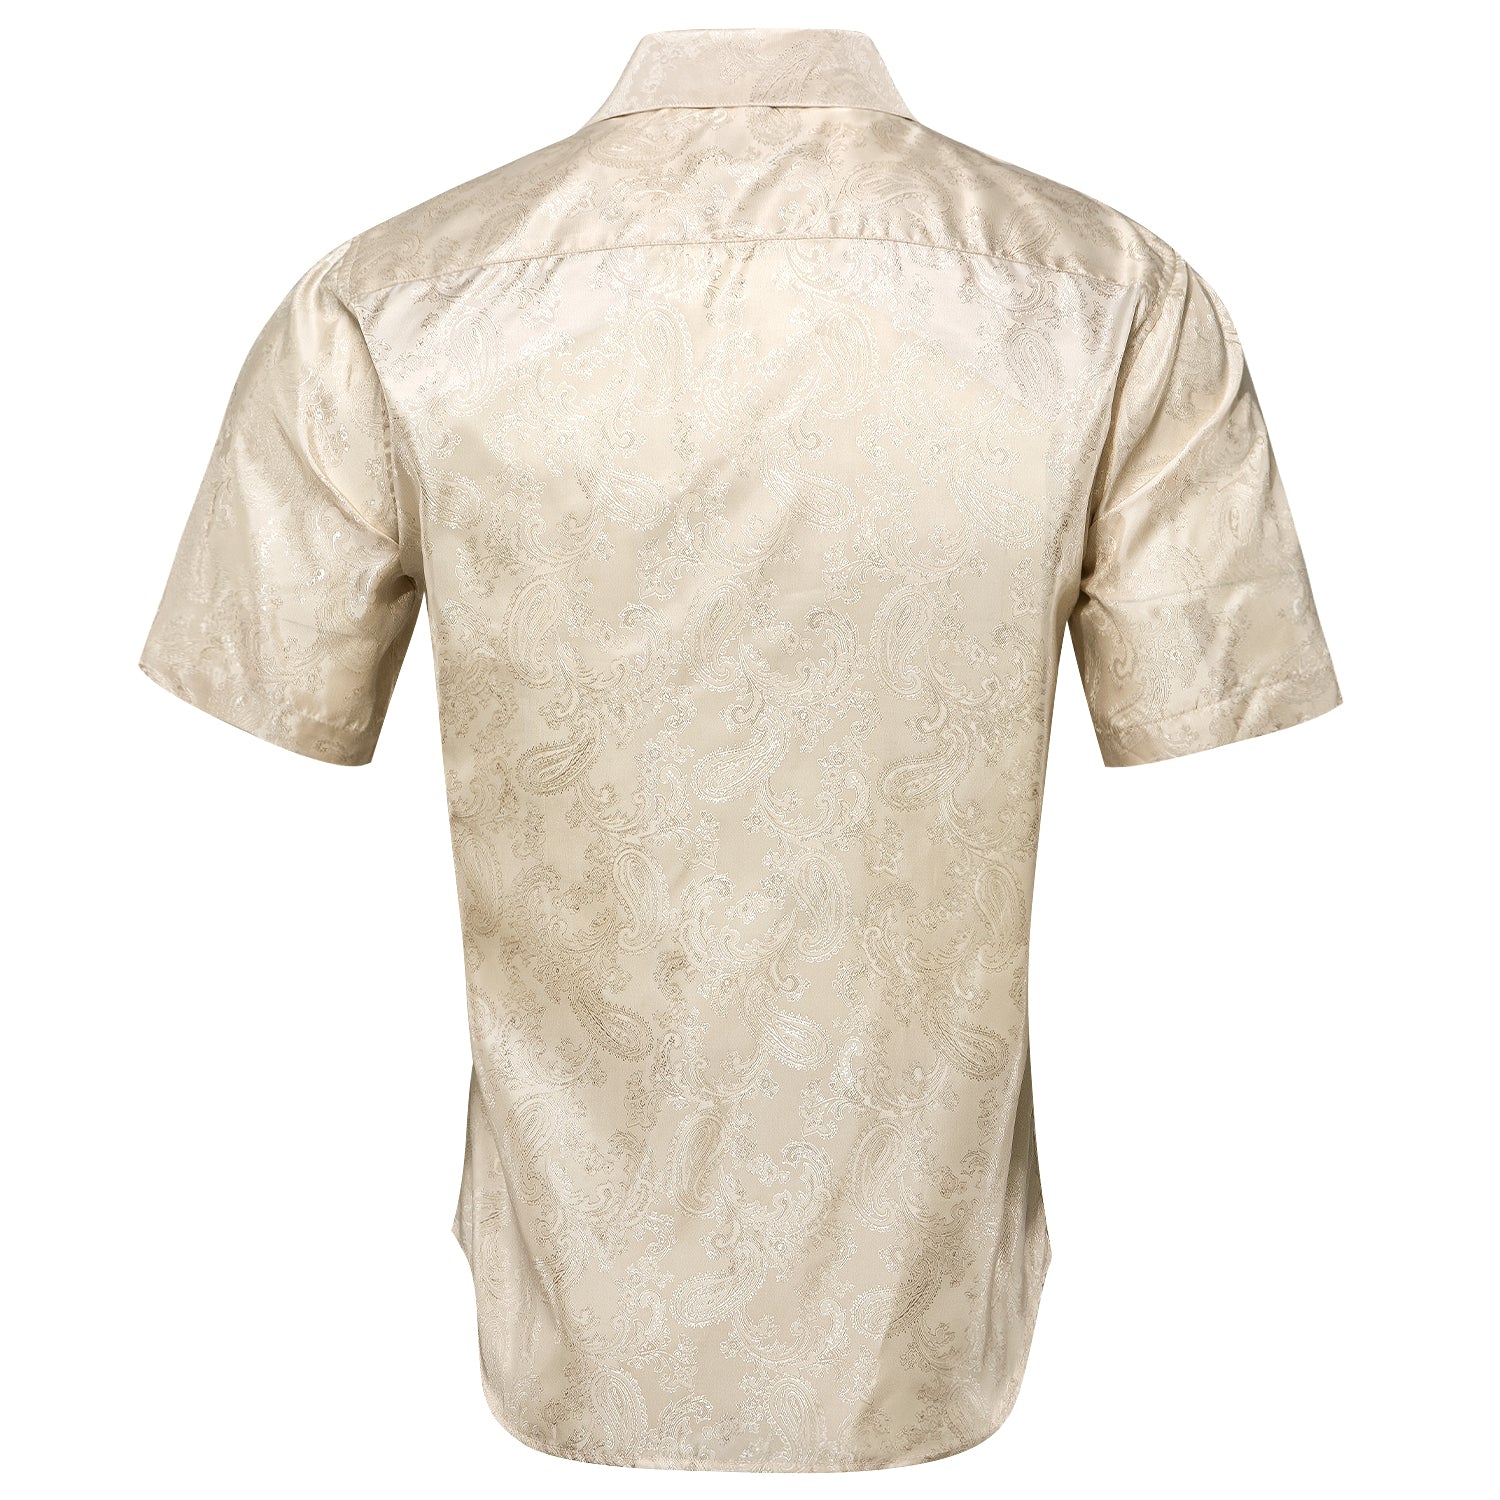 Champagne Paisley Silk Men's Short Sleeve Shirt